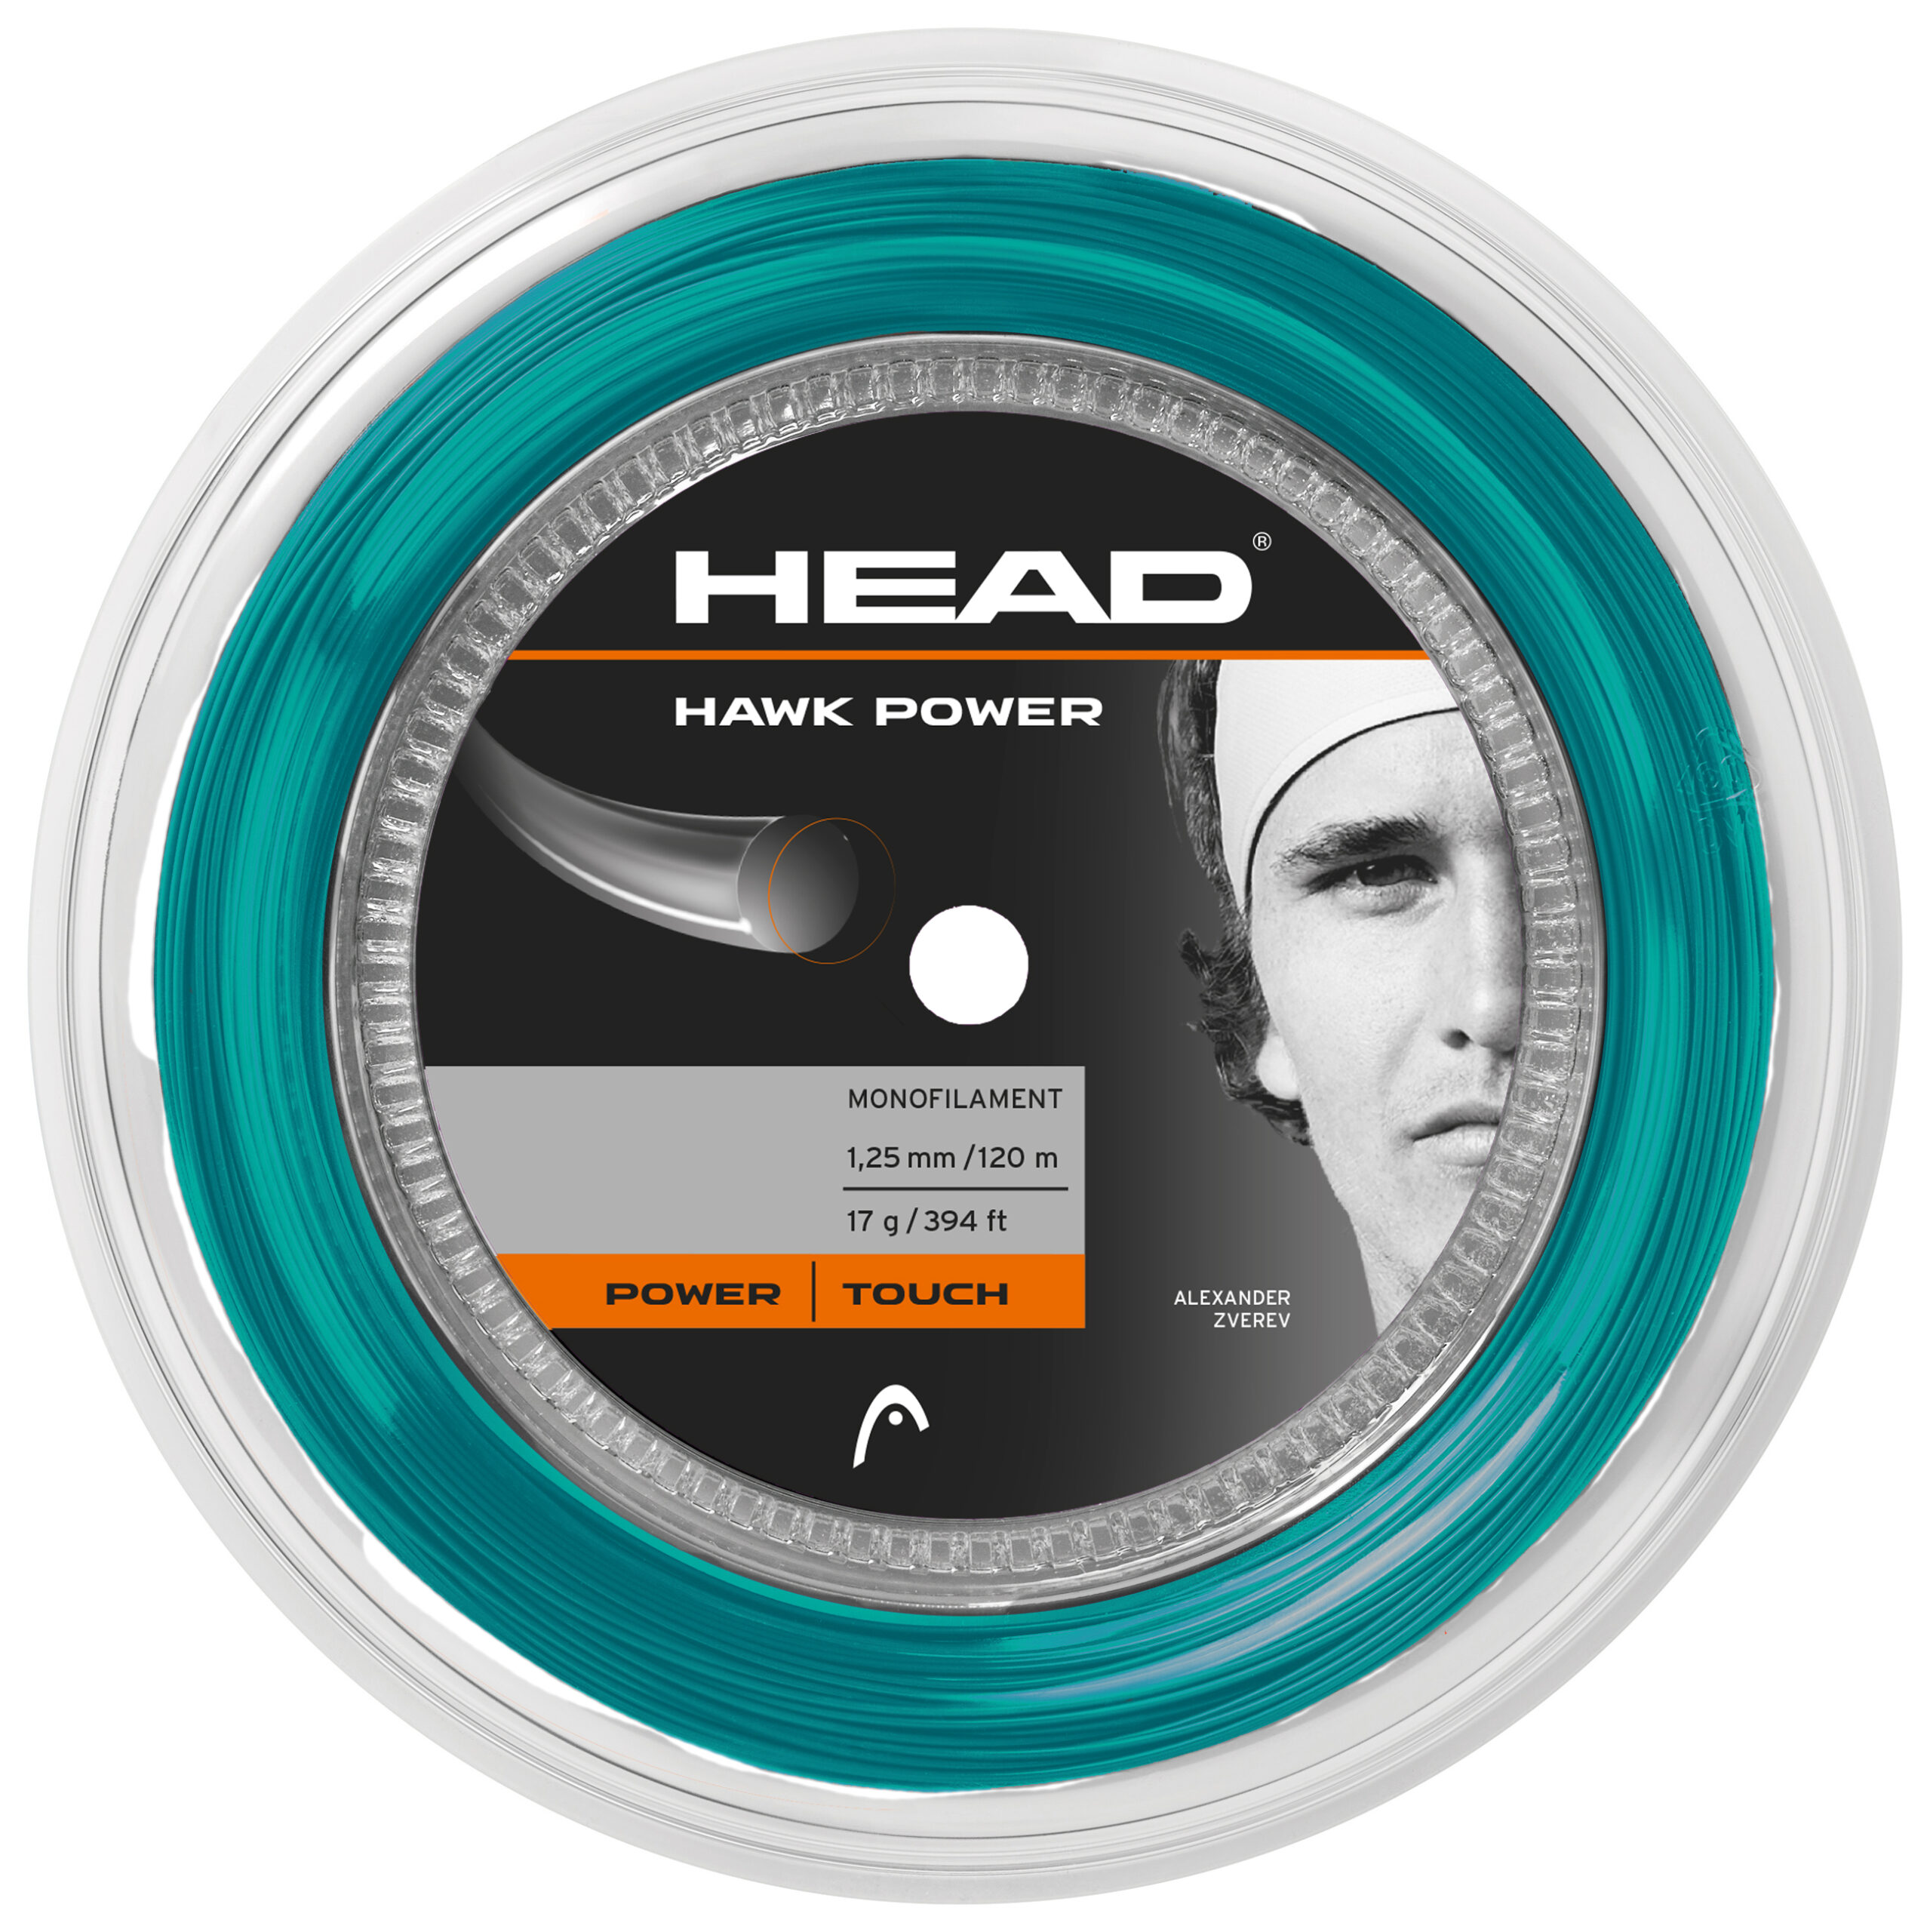 HEAD Hawk Power tennis strings review